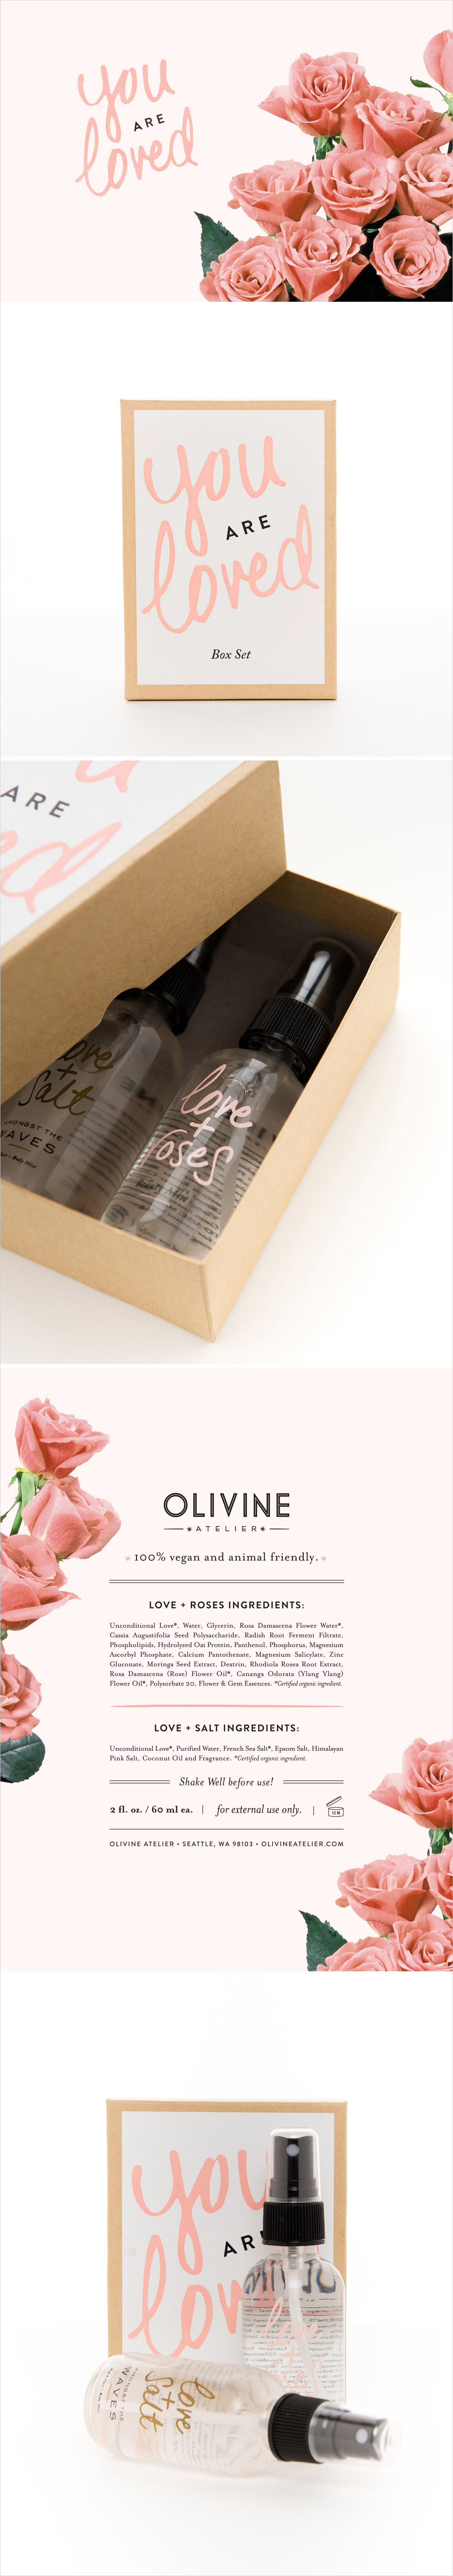 Branch | Olivine Atelier Box Set and Bath Salts